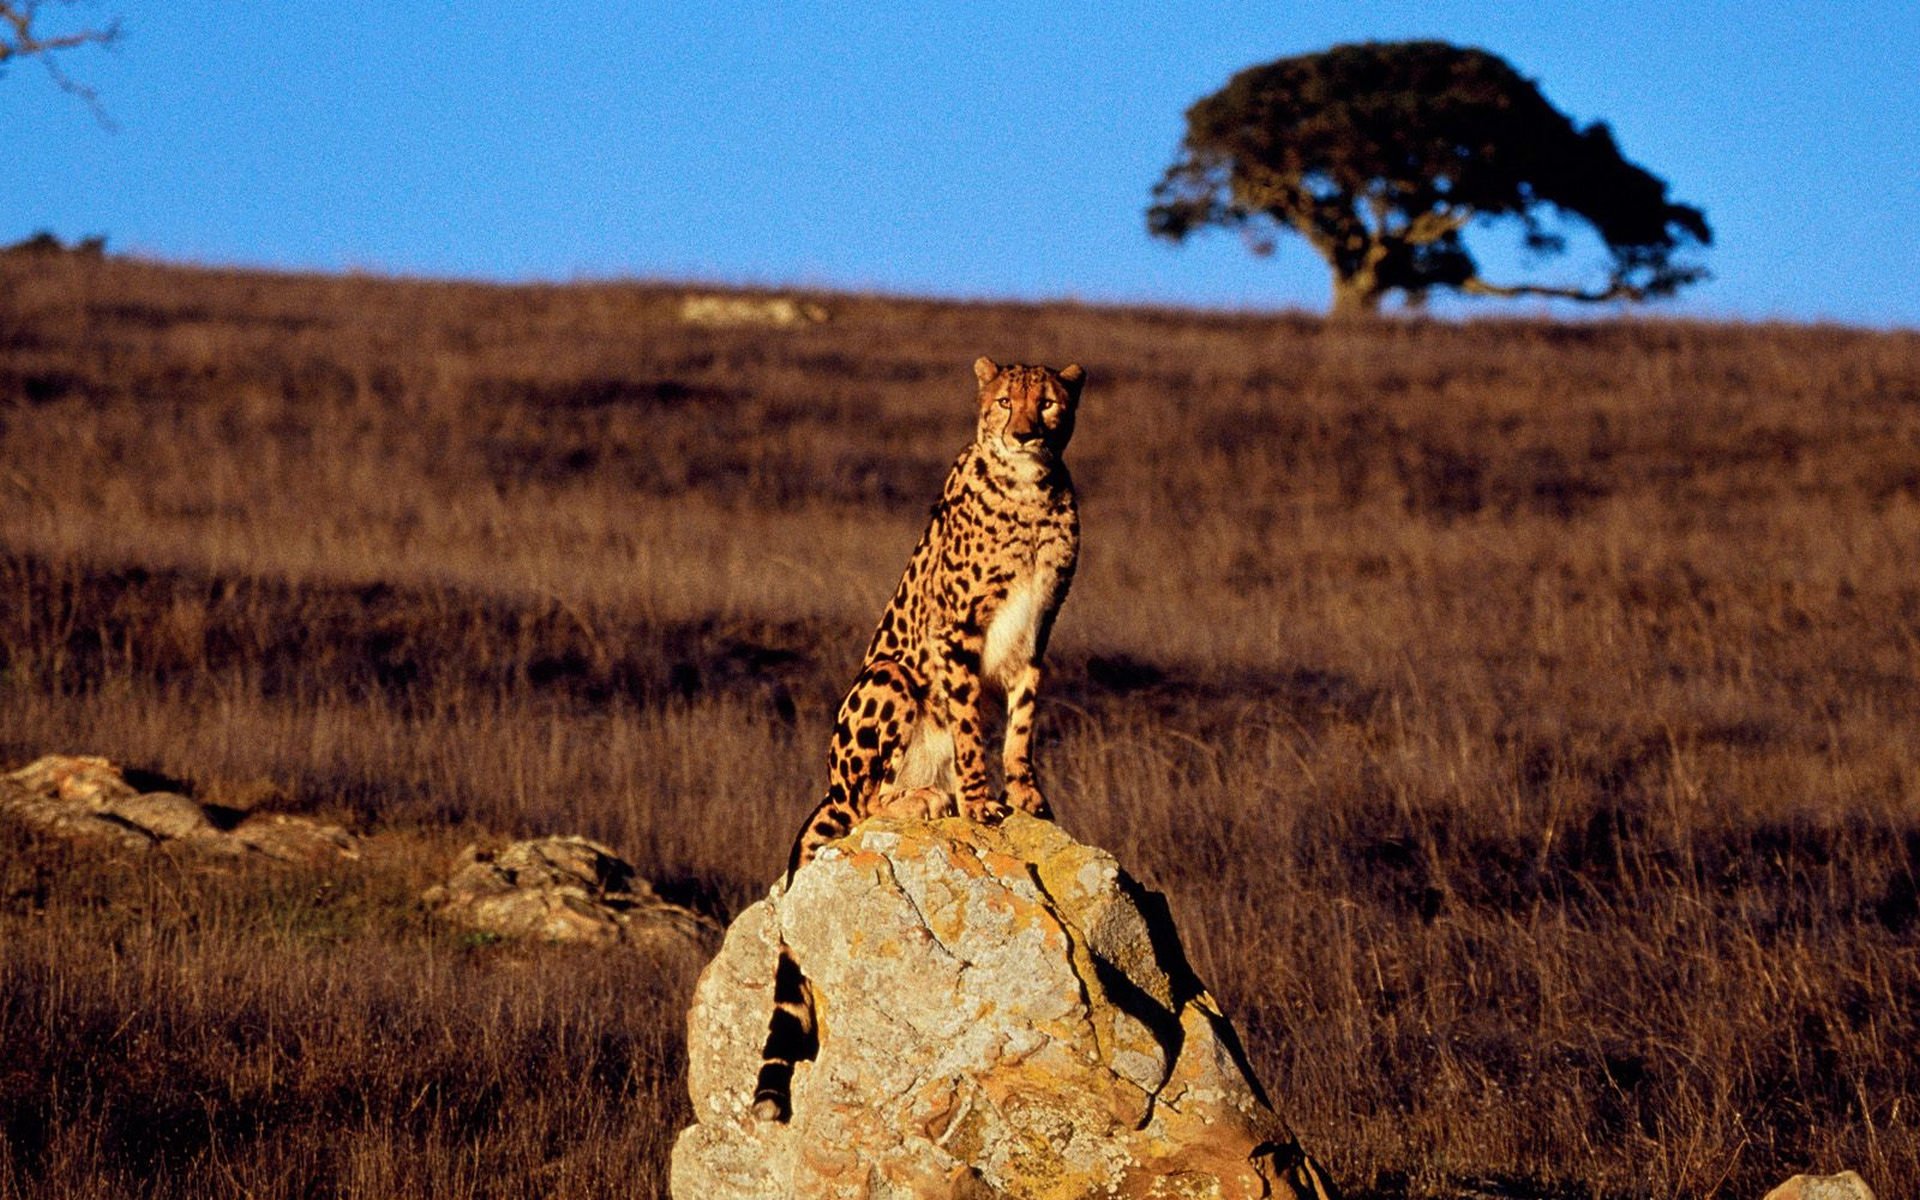 The King cheetah